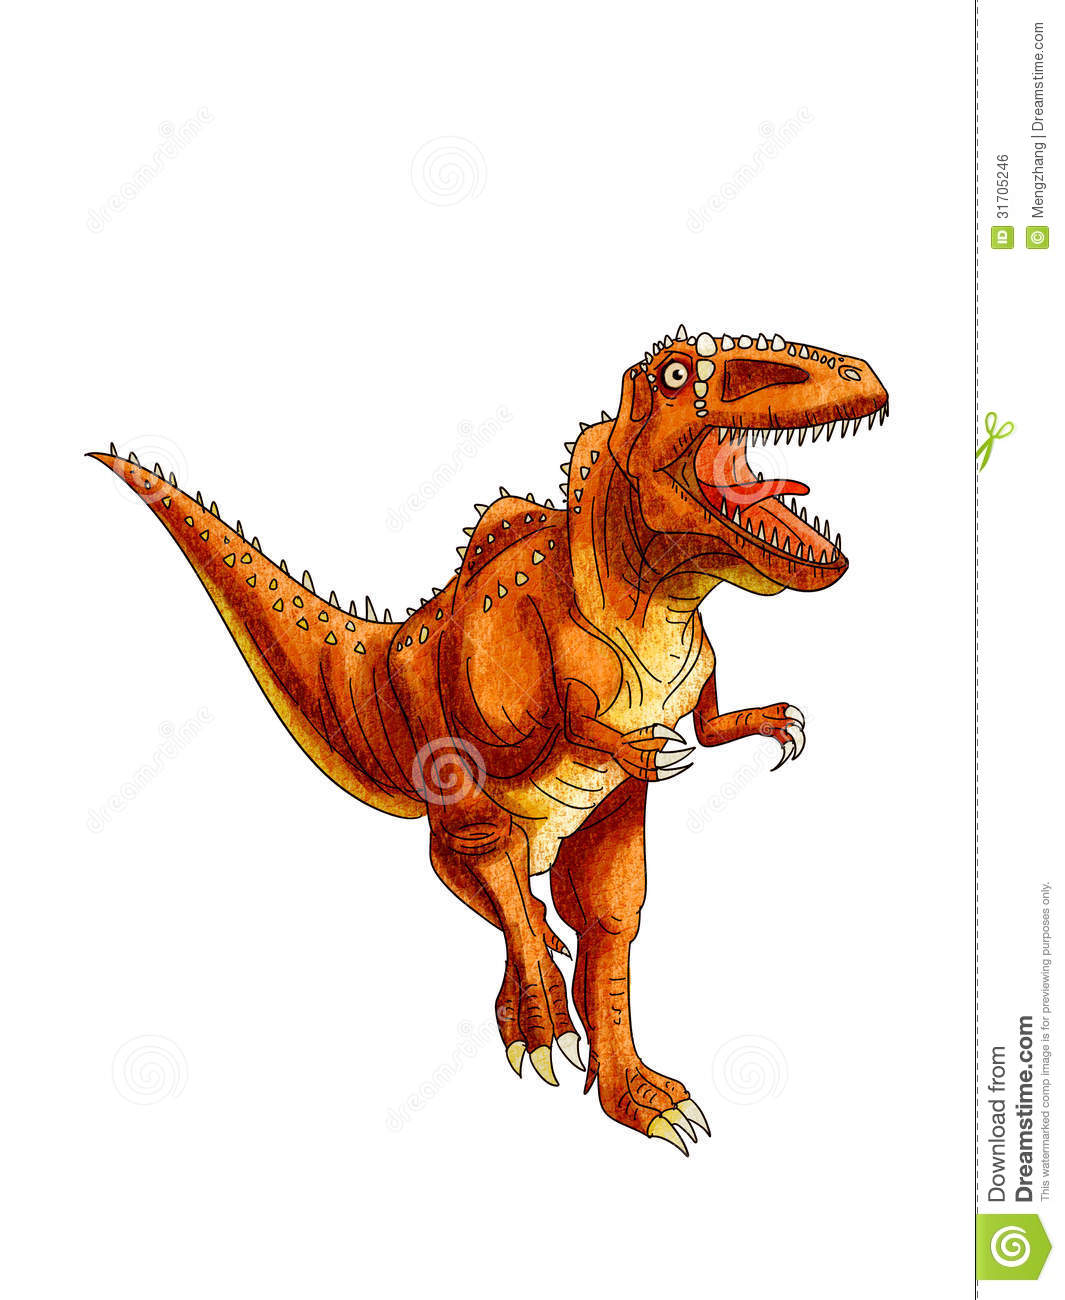 Dinosaur Giganotosaurus Royalty Free Stock Image   Image  31705246